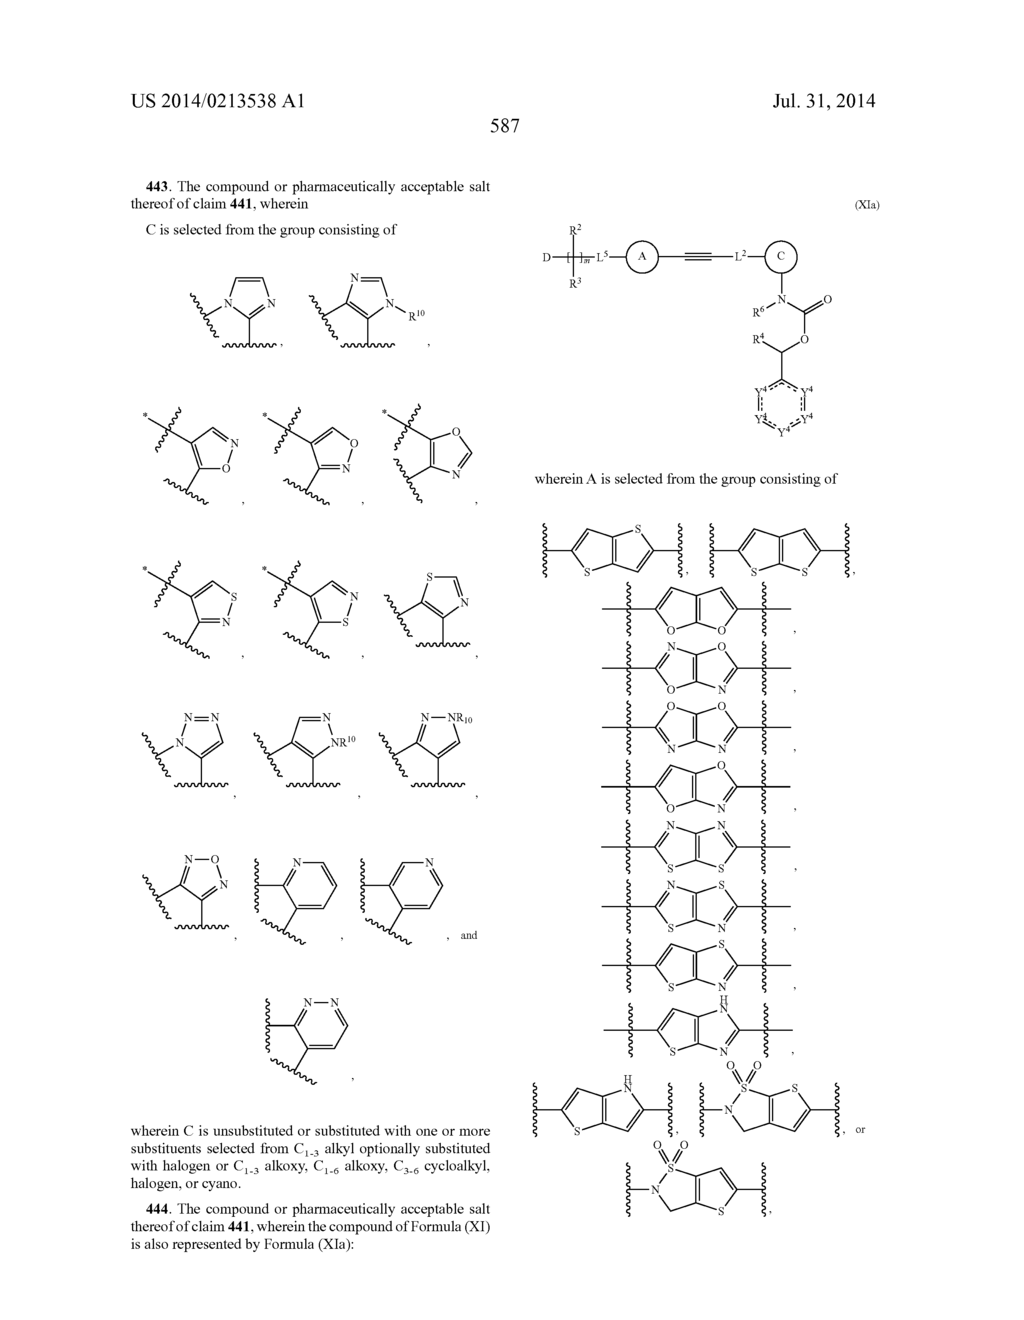 LYSOPHOSPHATIDIC ACID RECEPTOR ANTAGONISTS - diagram, schematic, and image 588